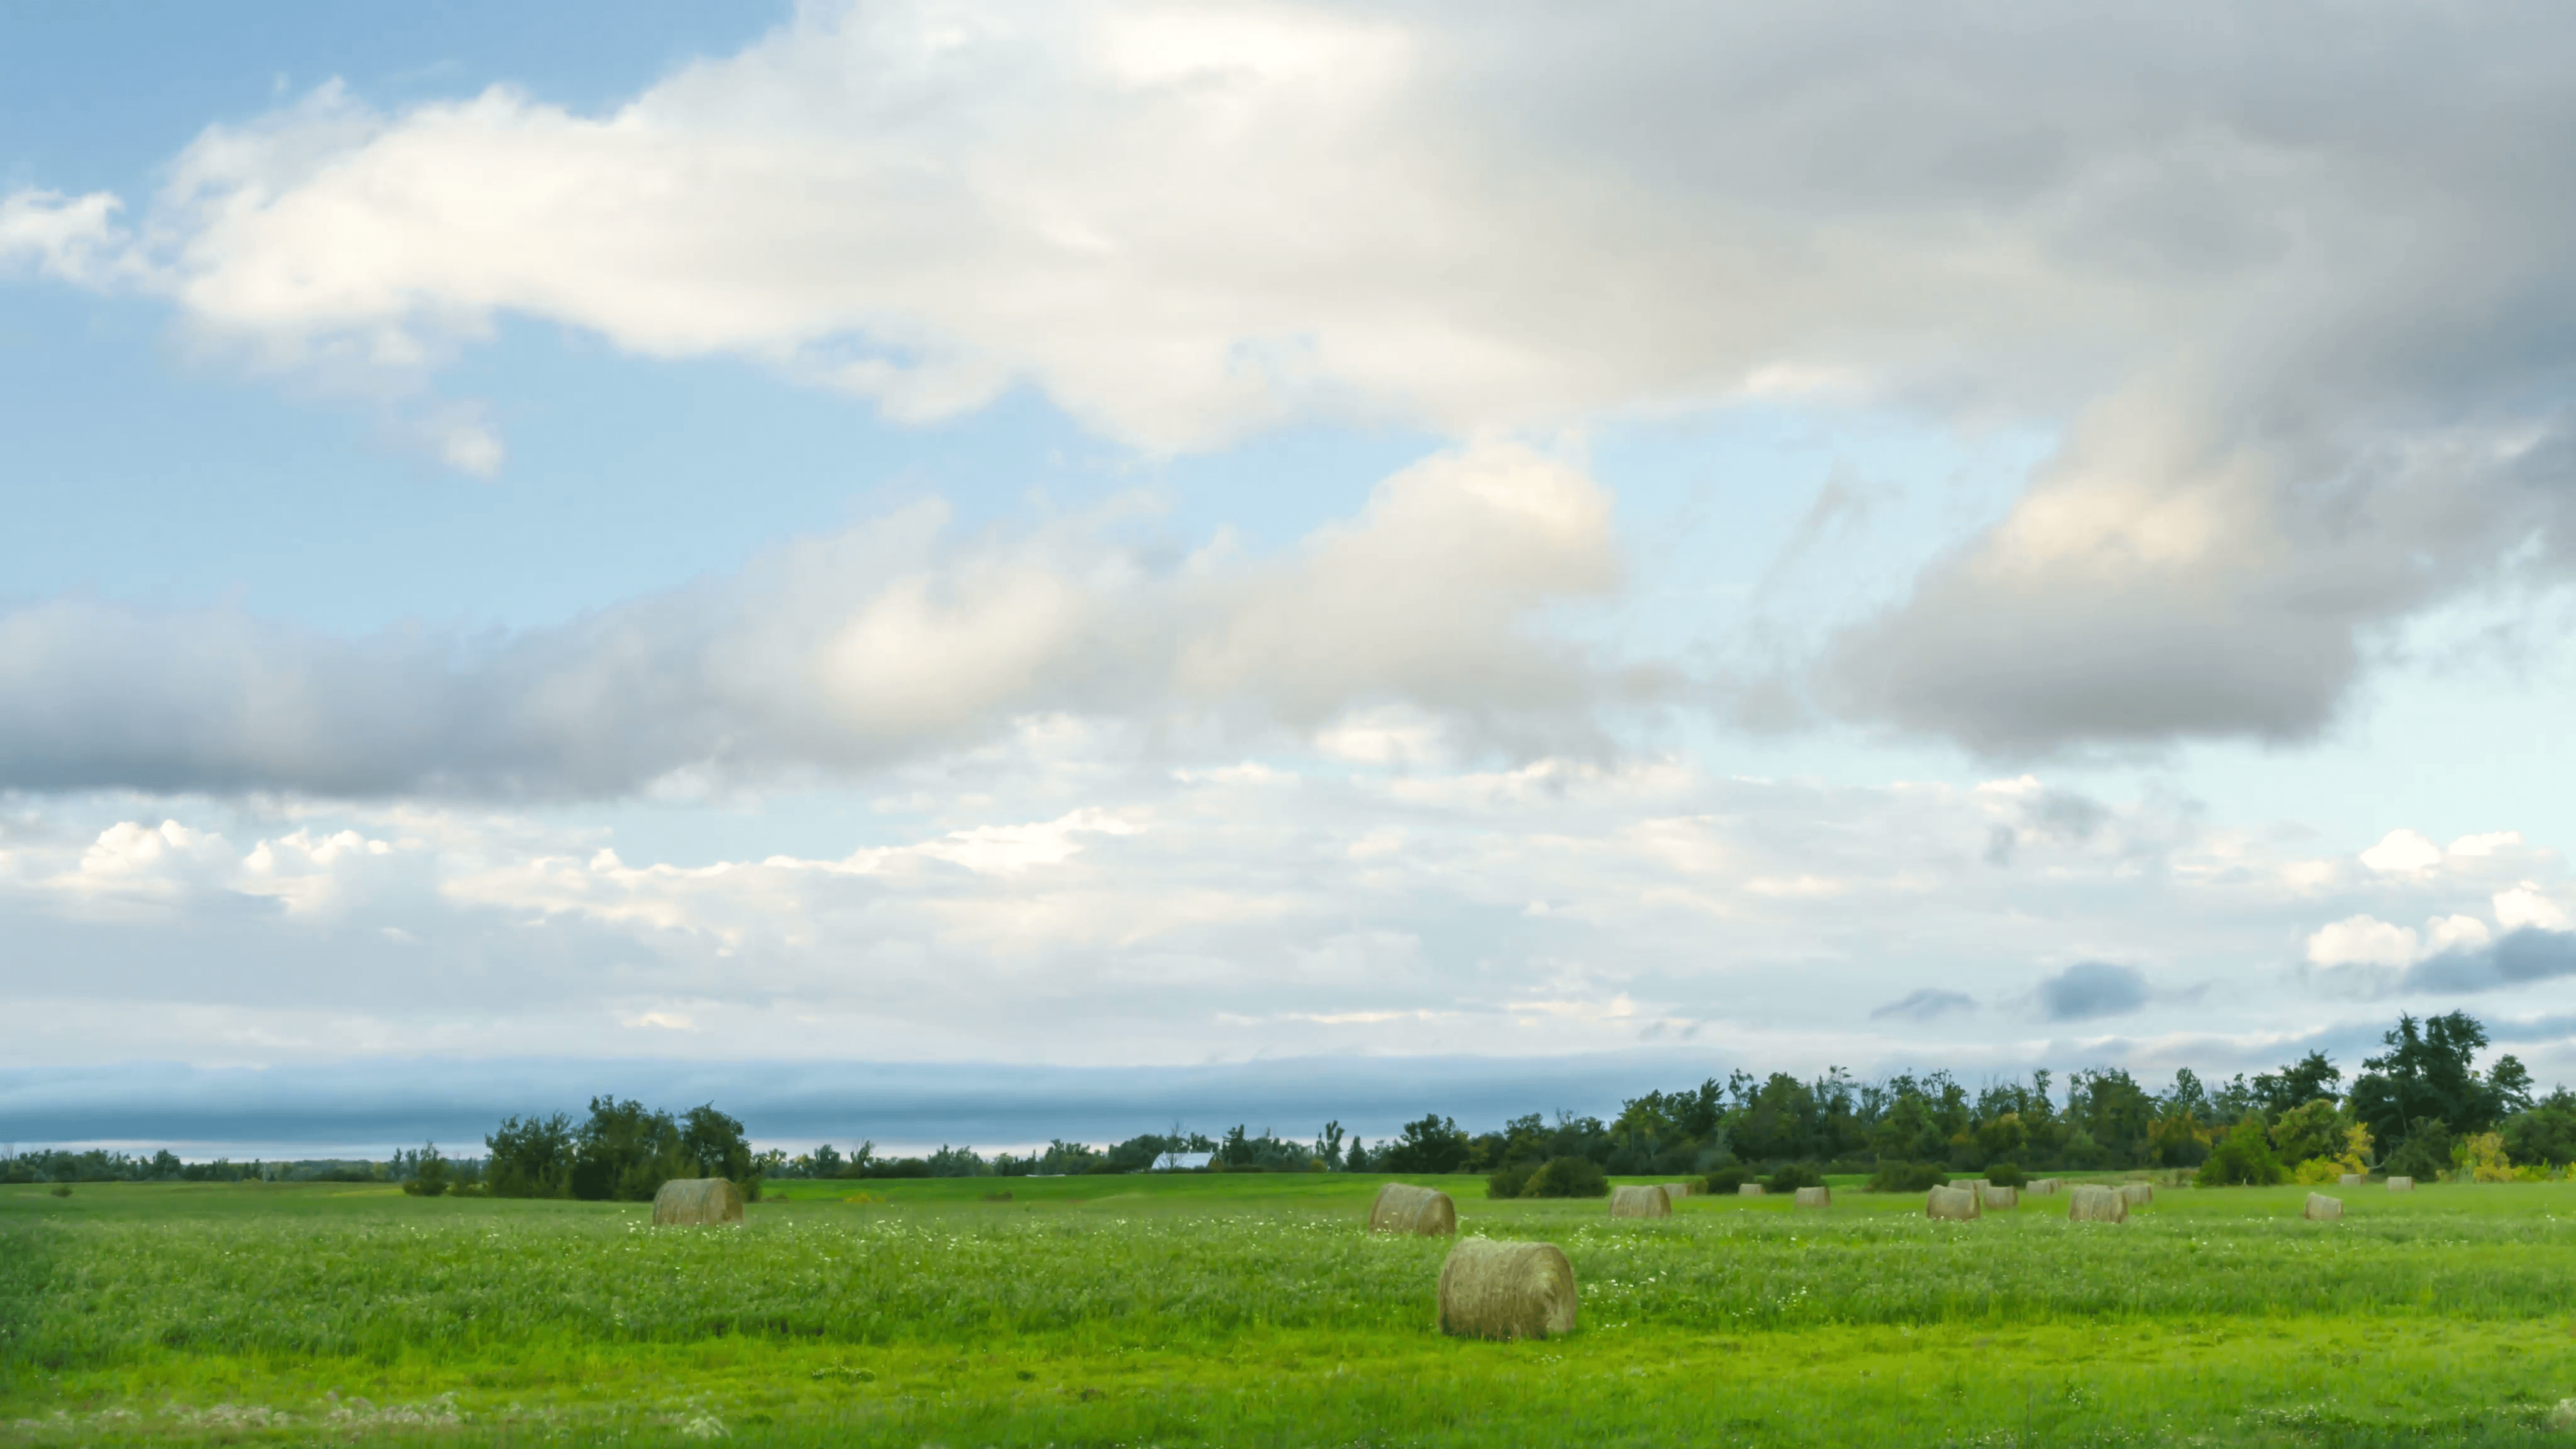 4k Timelapse of hay bales in an open field with nice blue sky in